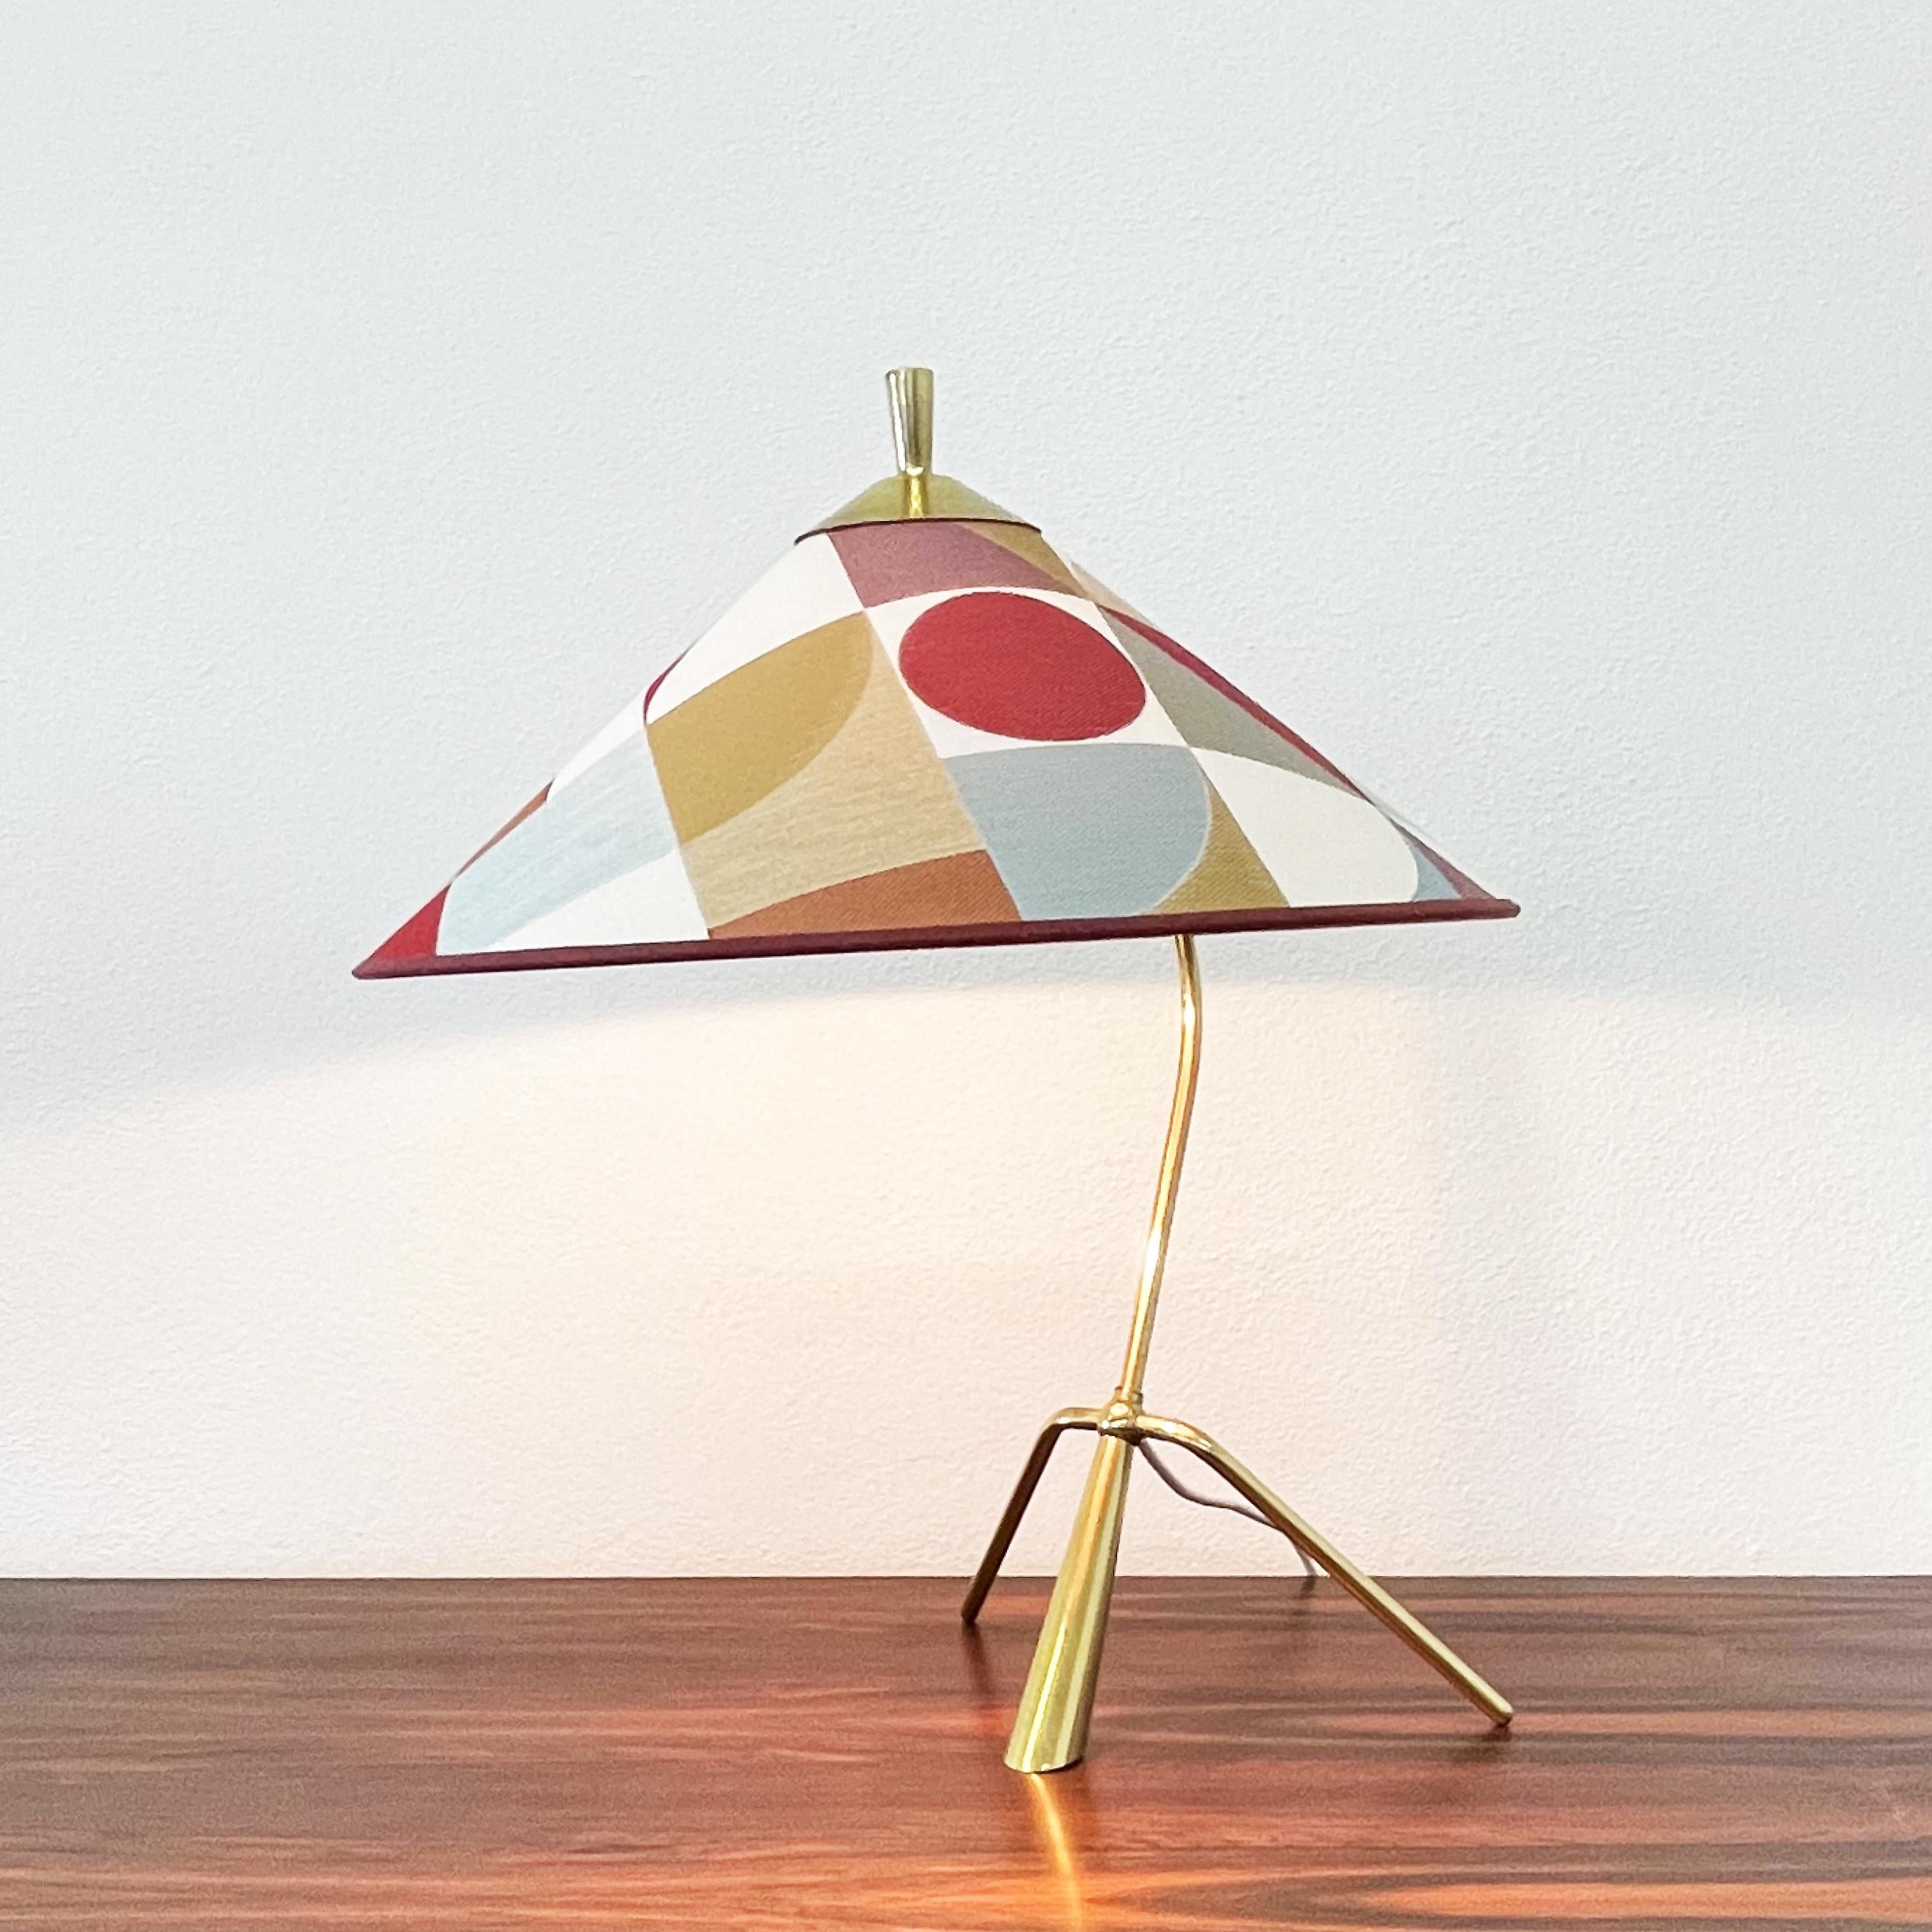 Danish 1960s table lamp.
Optional shade in nice monochromatic fabric